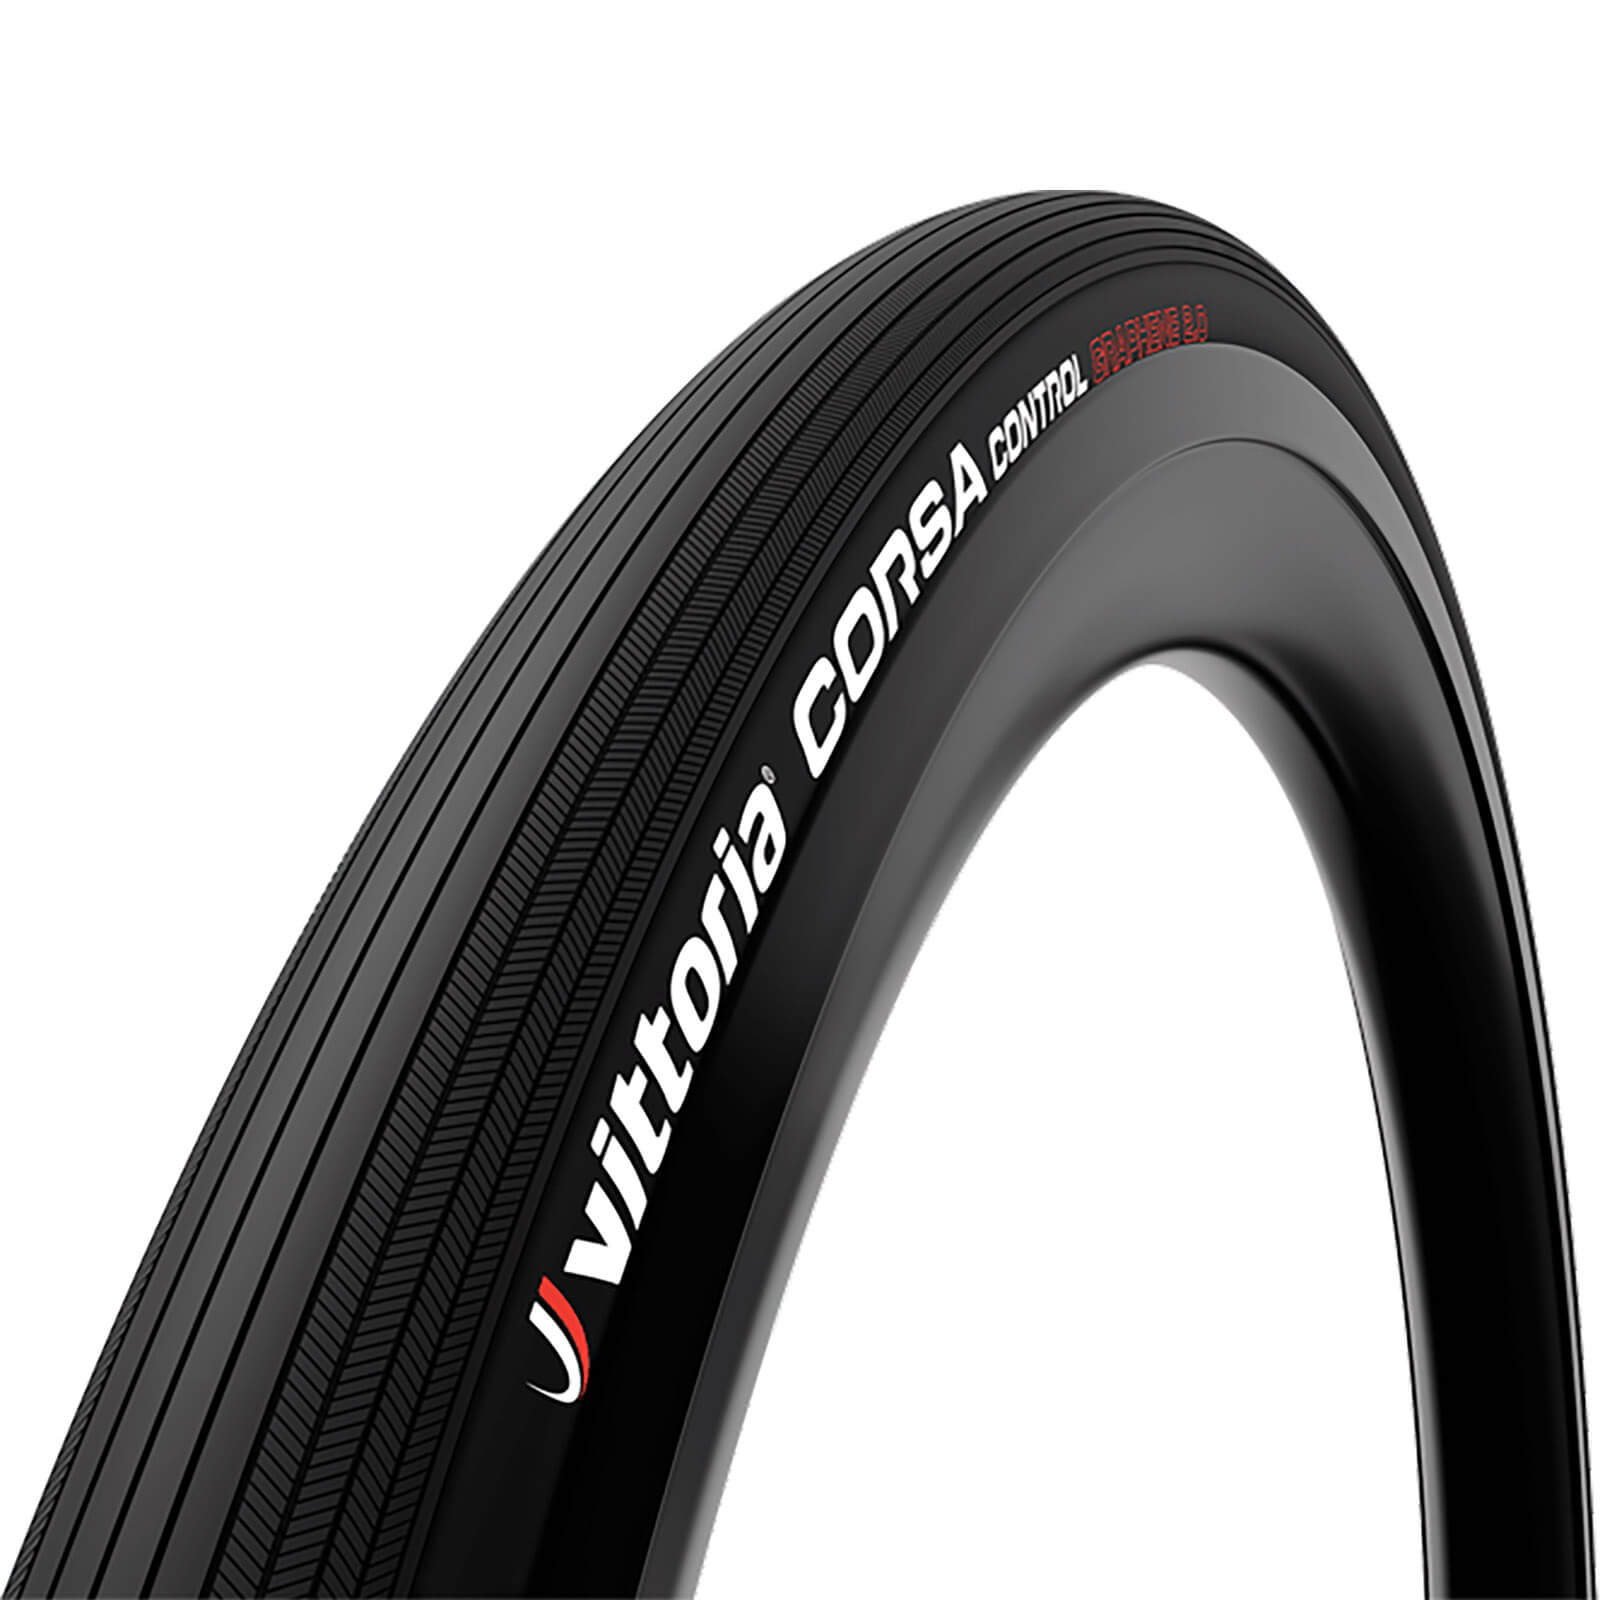 Vittoria Corsa Control G2.0 Tubular Road Tyre - 700x30mm - Full Black